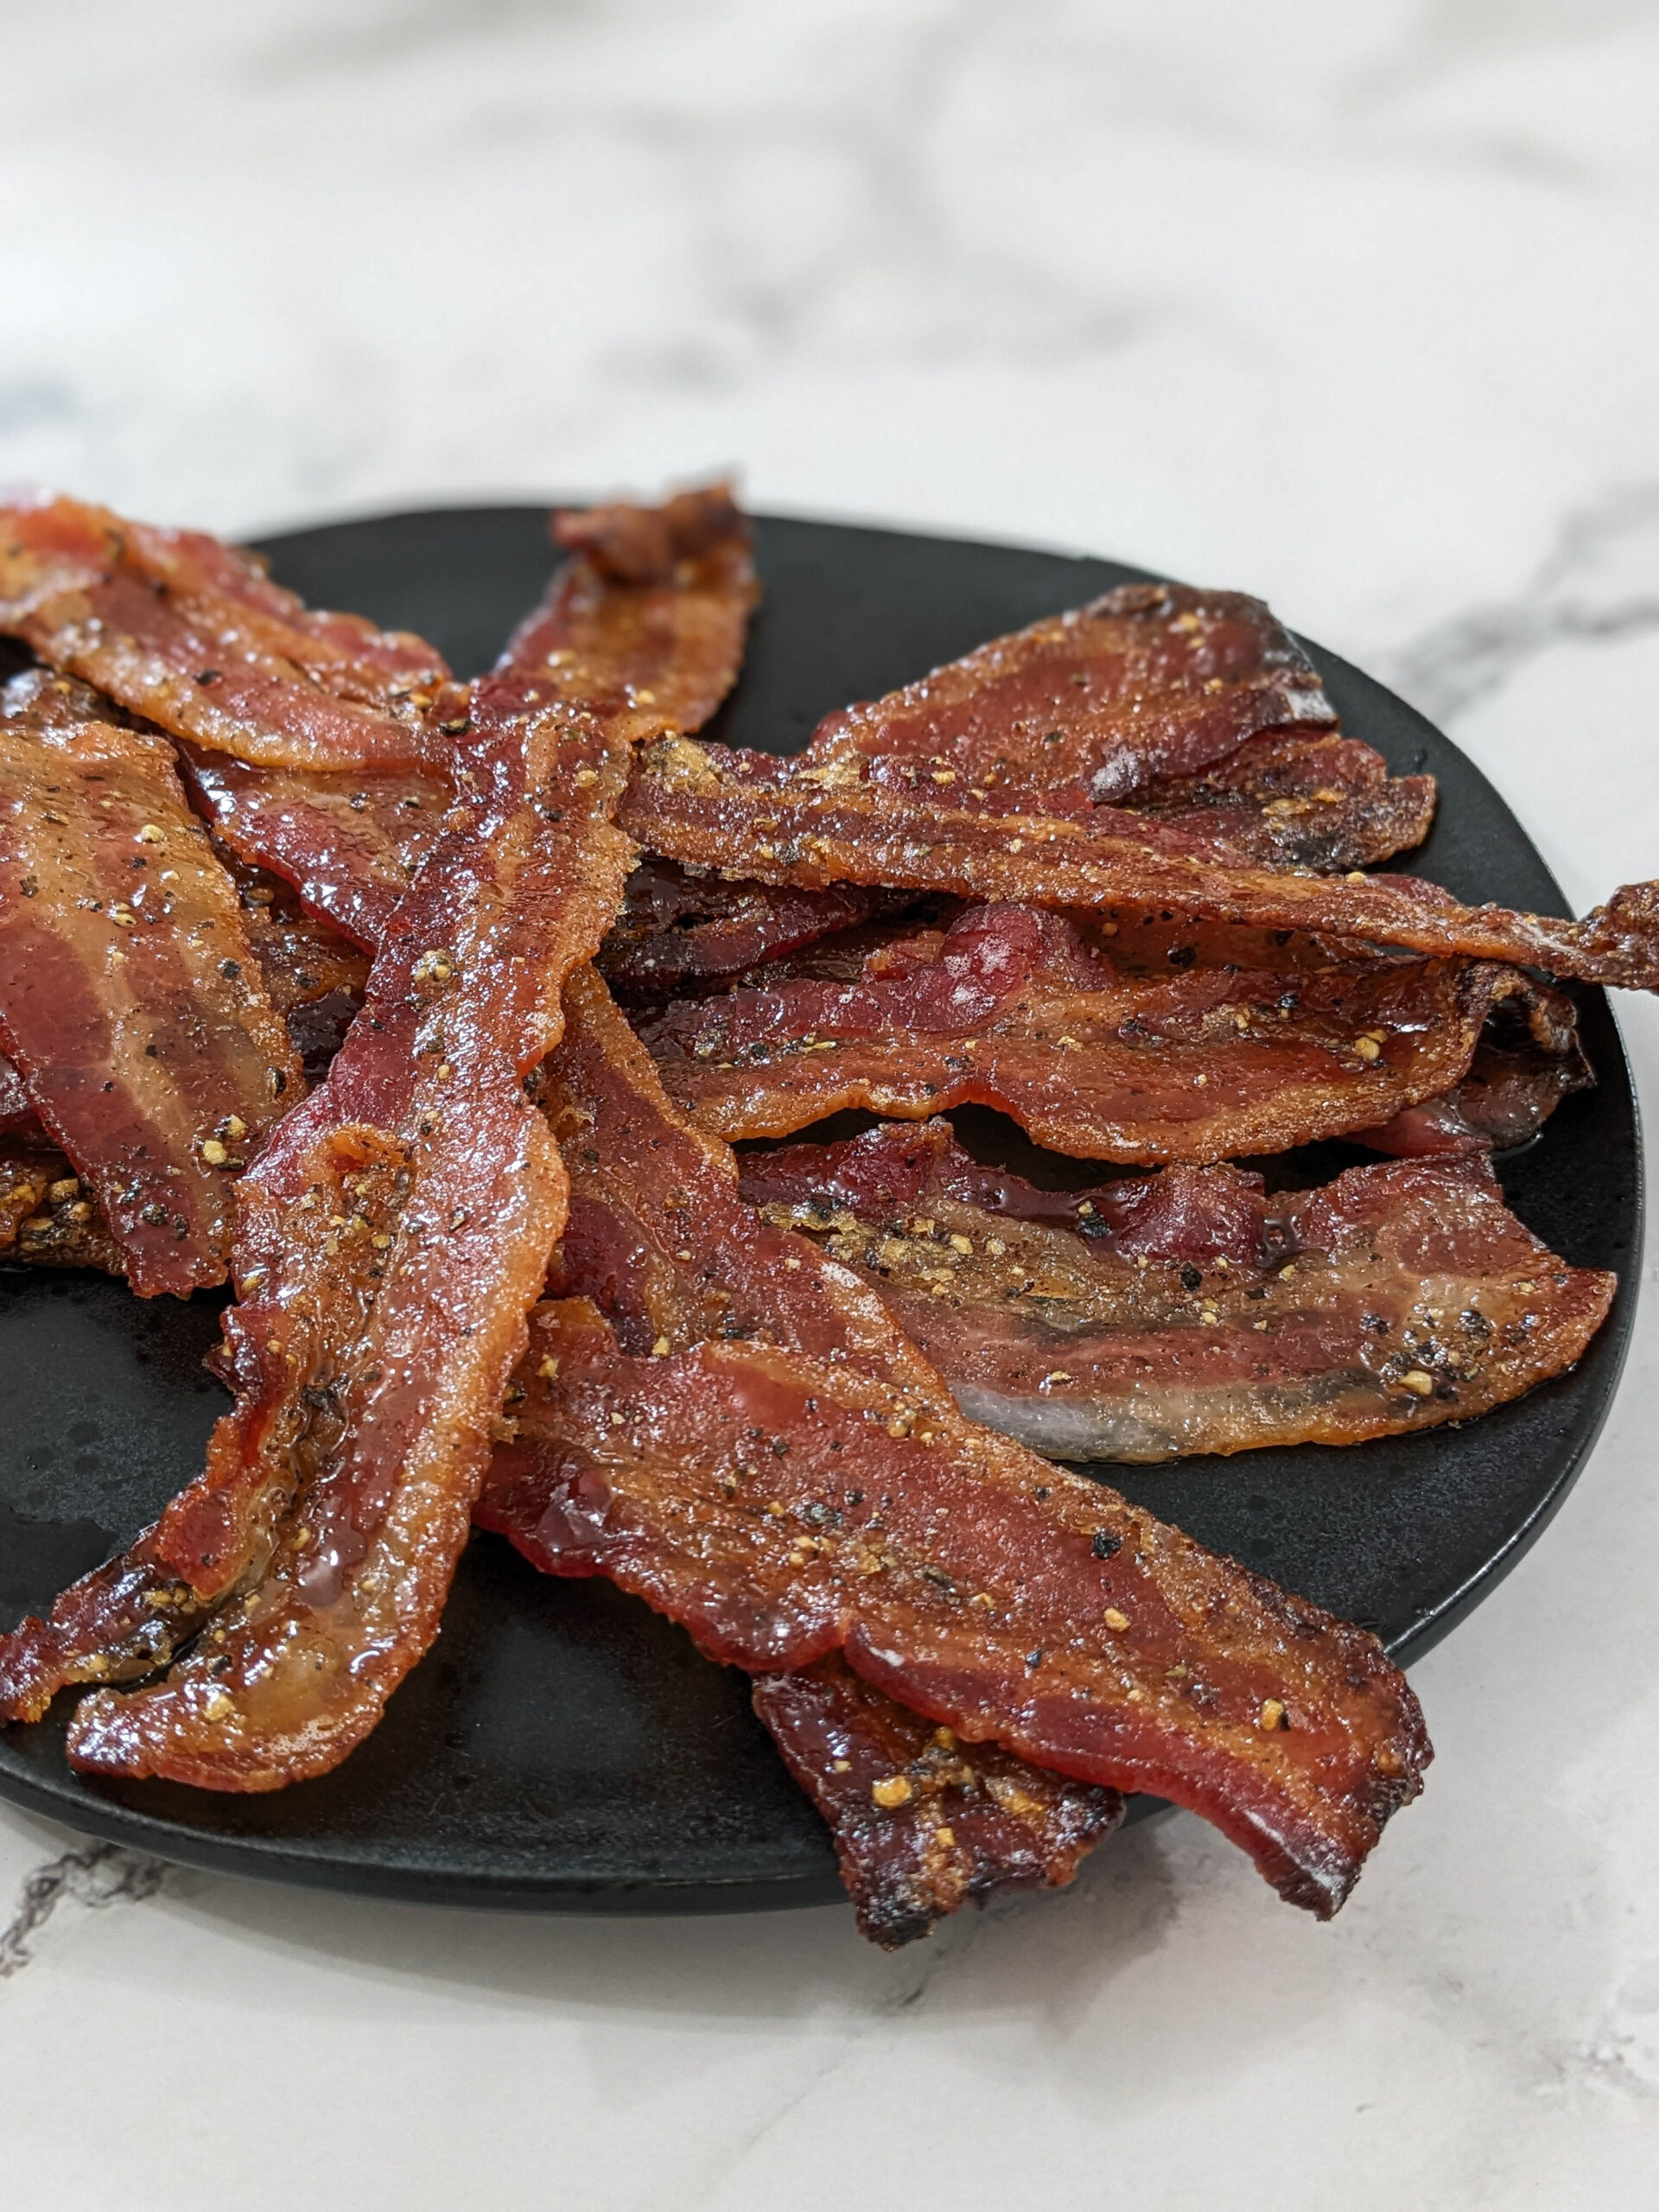 Candied Bacon (aka Bacon “Crack”)